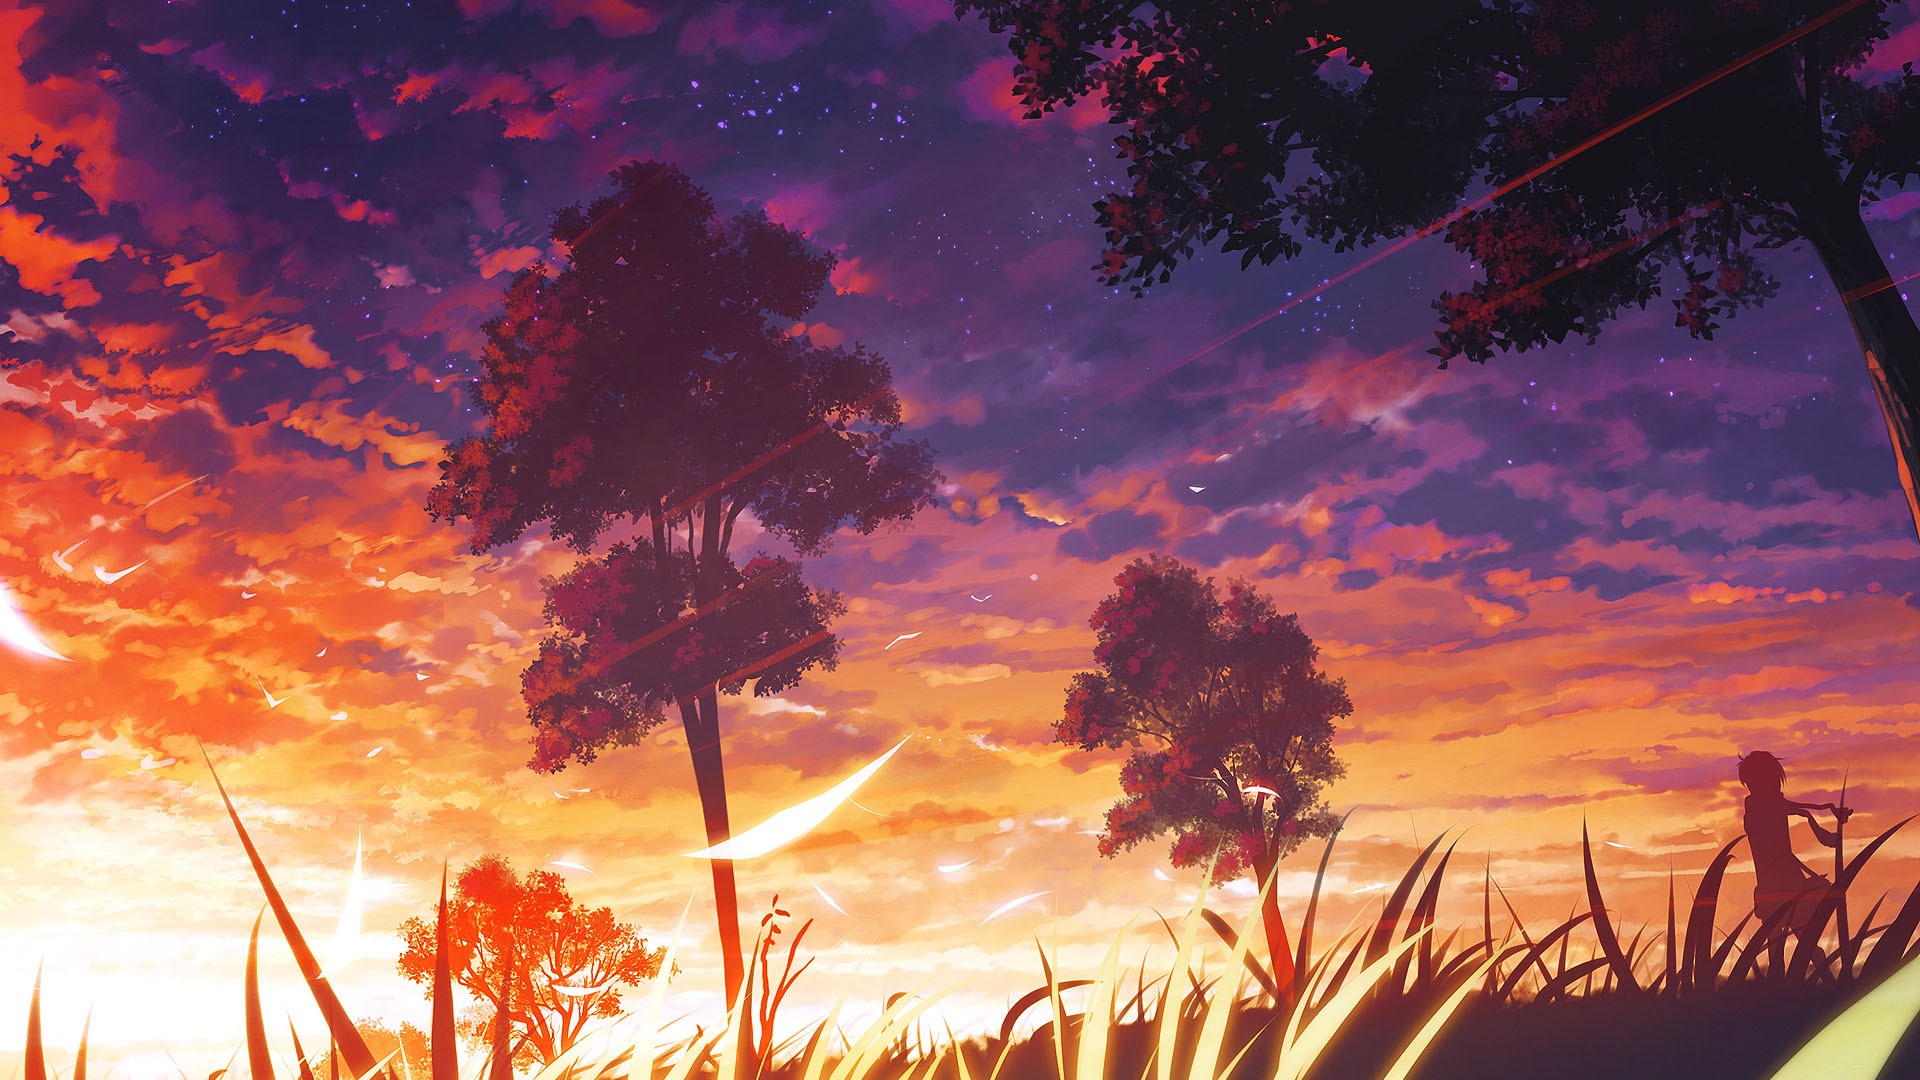 Wallpaper, sunlight, trees, sunset, anime girls, sky, artwork, sunrise, evening, morning, atmosphere, dusk, cloud, autumn, dawn, computer wallpaper 1920x1080